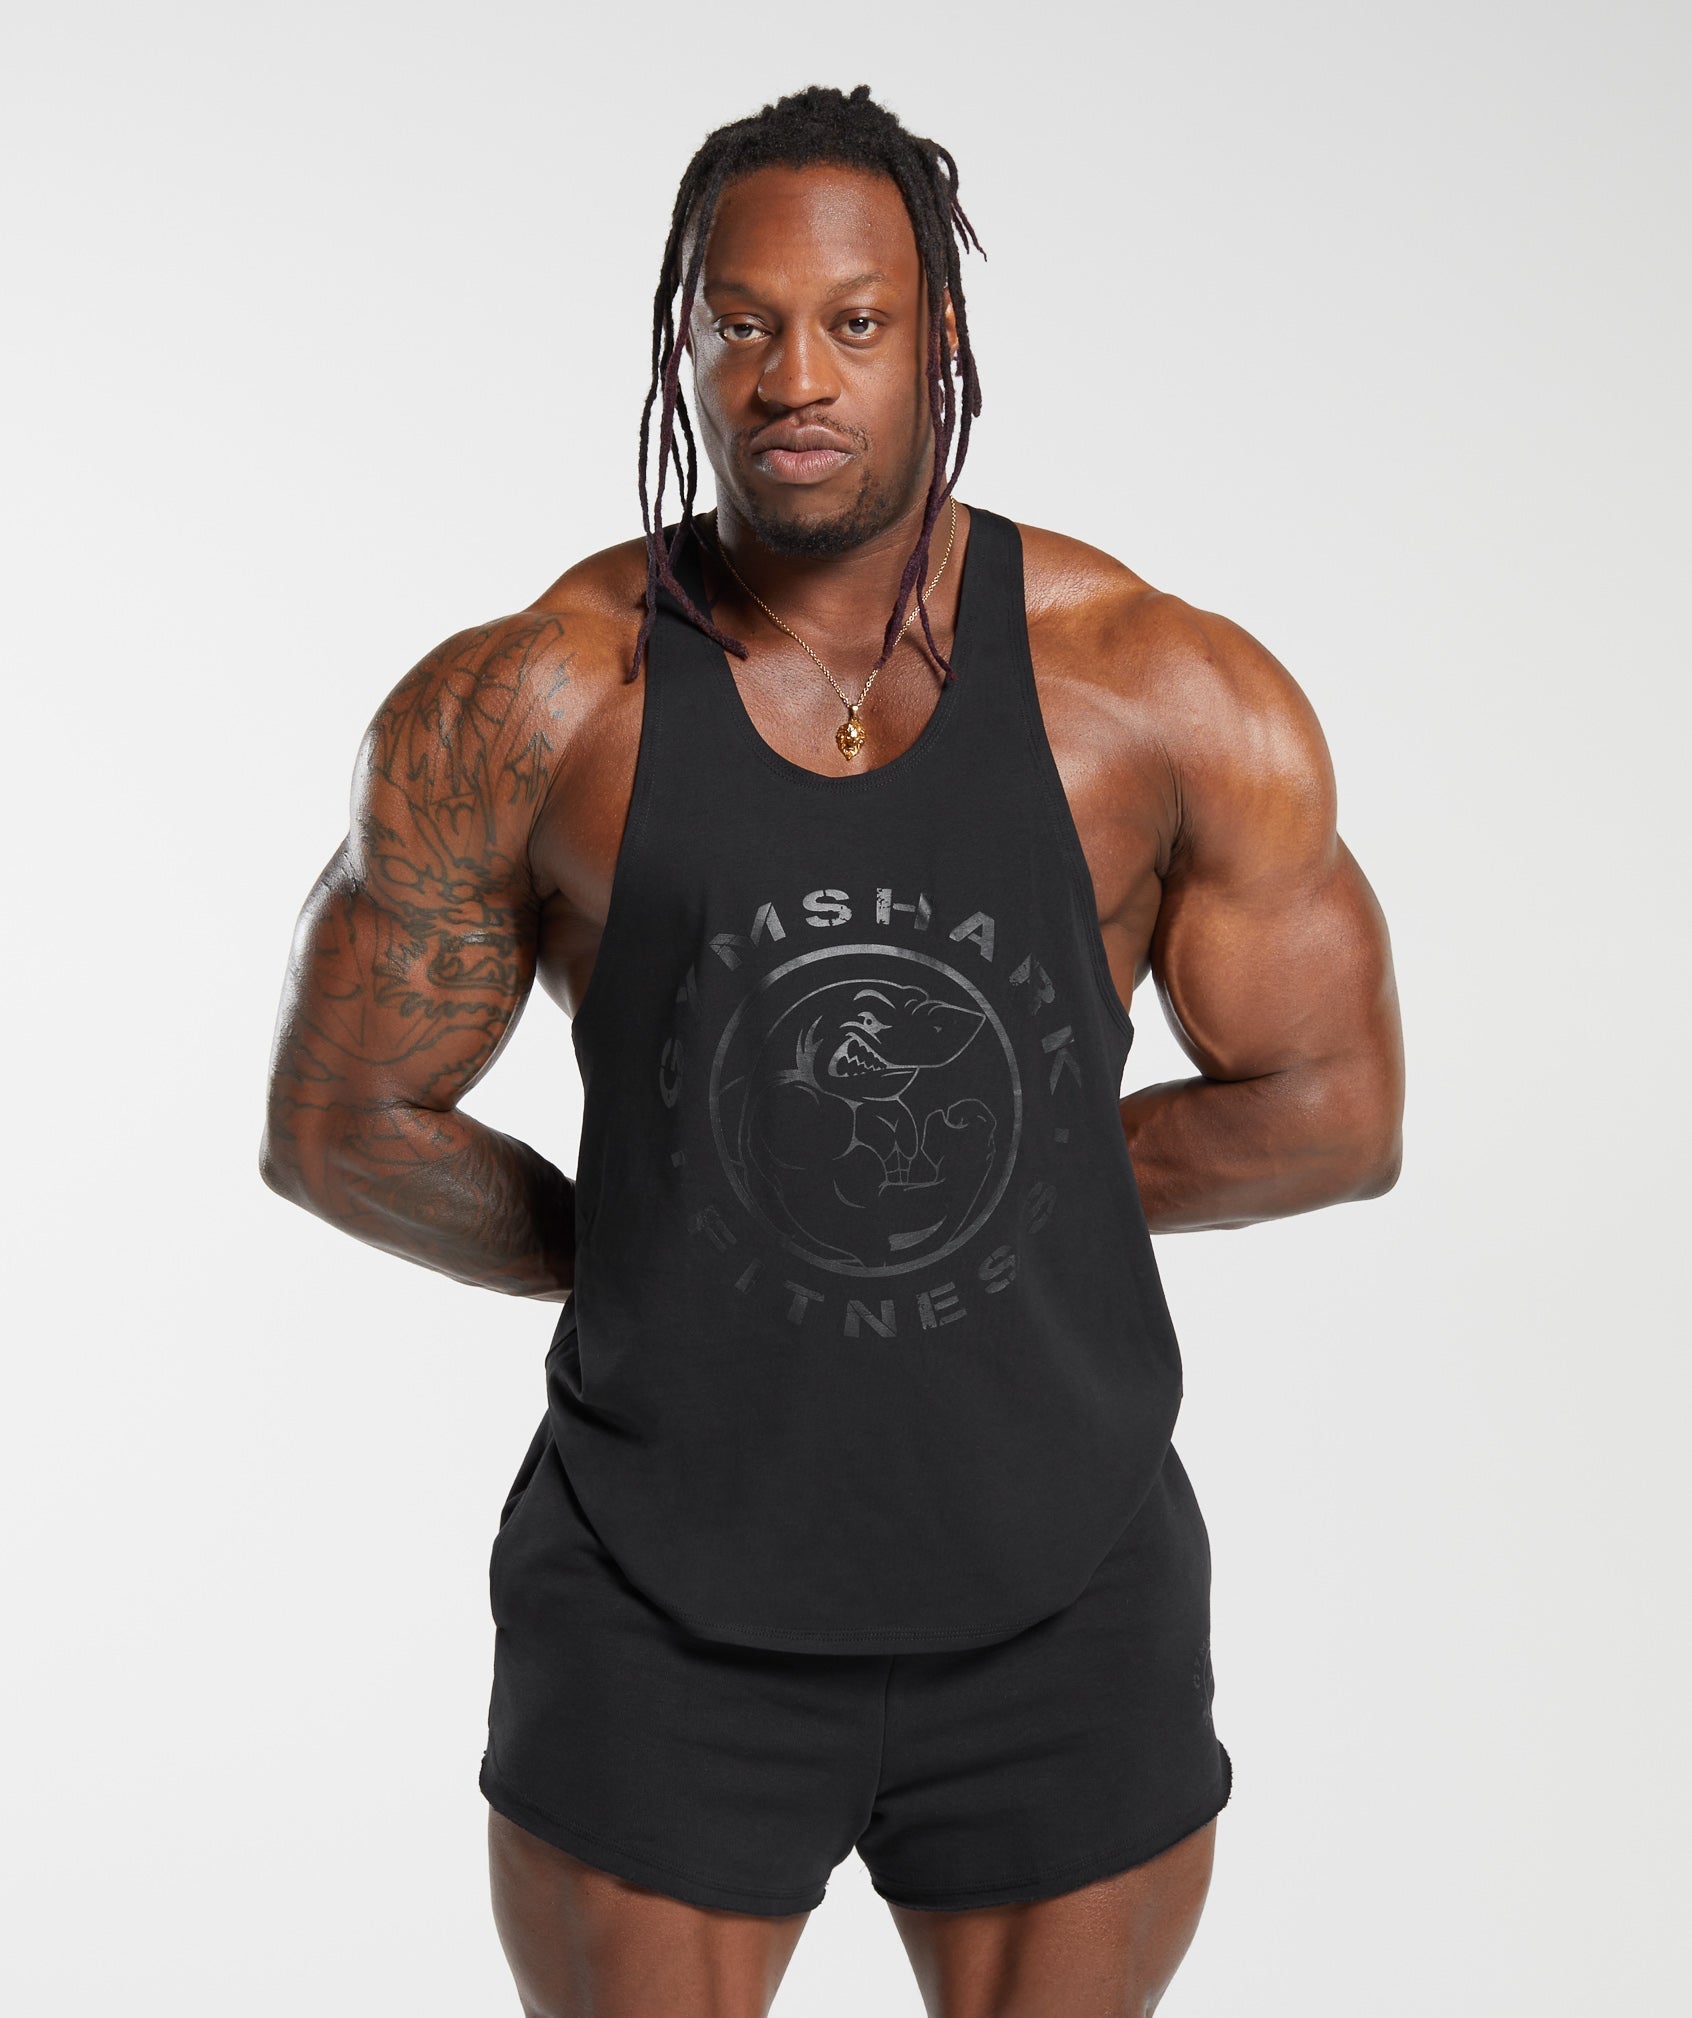 Men's vest sleeveless Bodybuilding Stringer Tank Top Fitness Gym Workout  Cotton